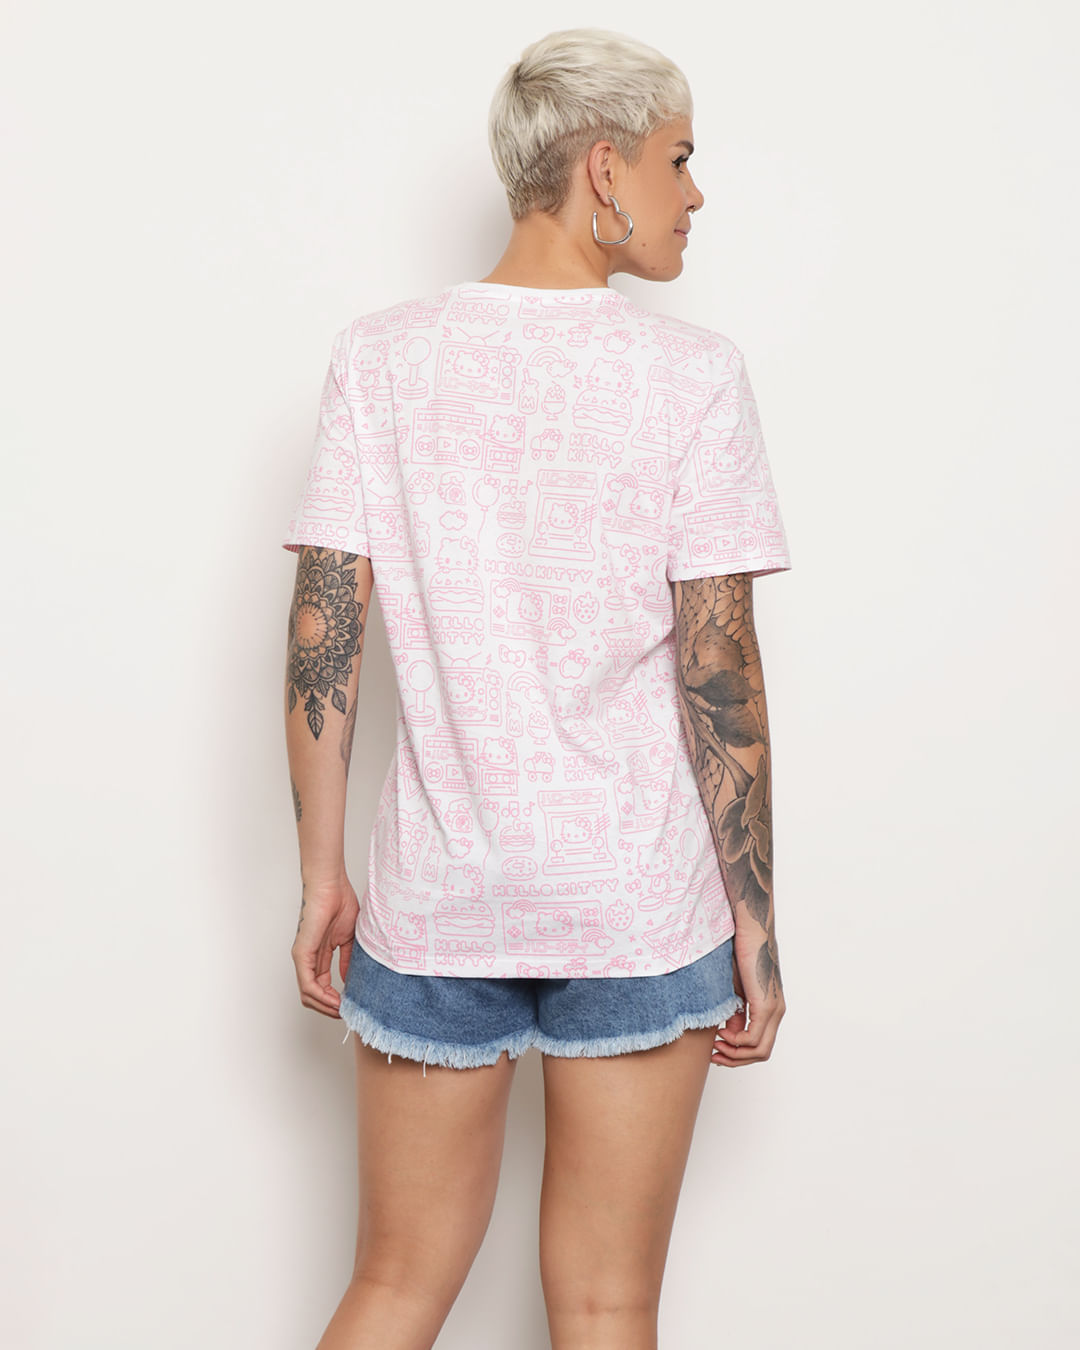 Camiseta de manga curta feminina 100% algodão, rosa doce, estampa Angel  Kitty, blusa solta, roupa